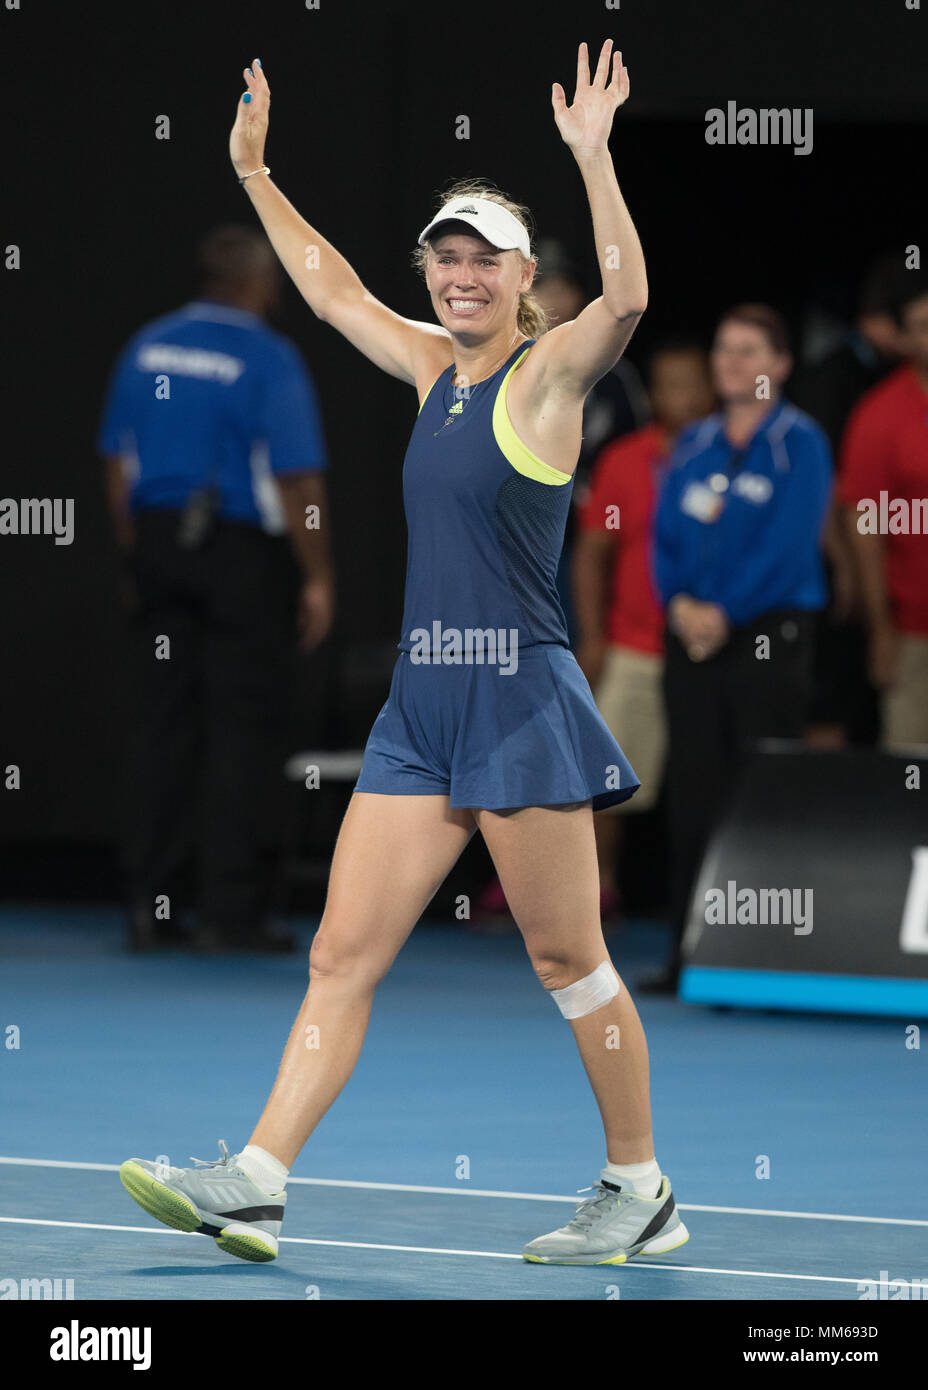 Danish tennis player Caroline Wozniacki celebrating during women's singles  match in Australian Open 2018 Tennis Tournament, Melbourne Park, Melbourne  Stock Photo - Alamy